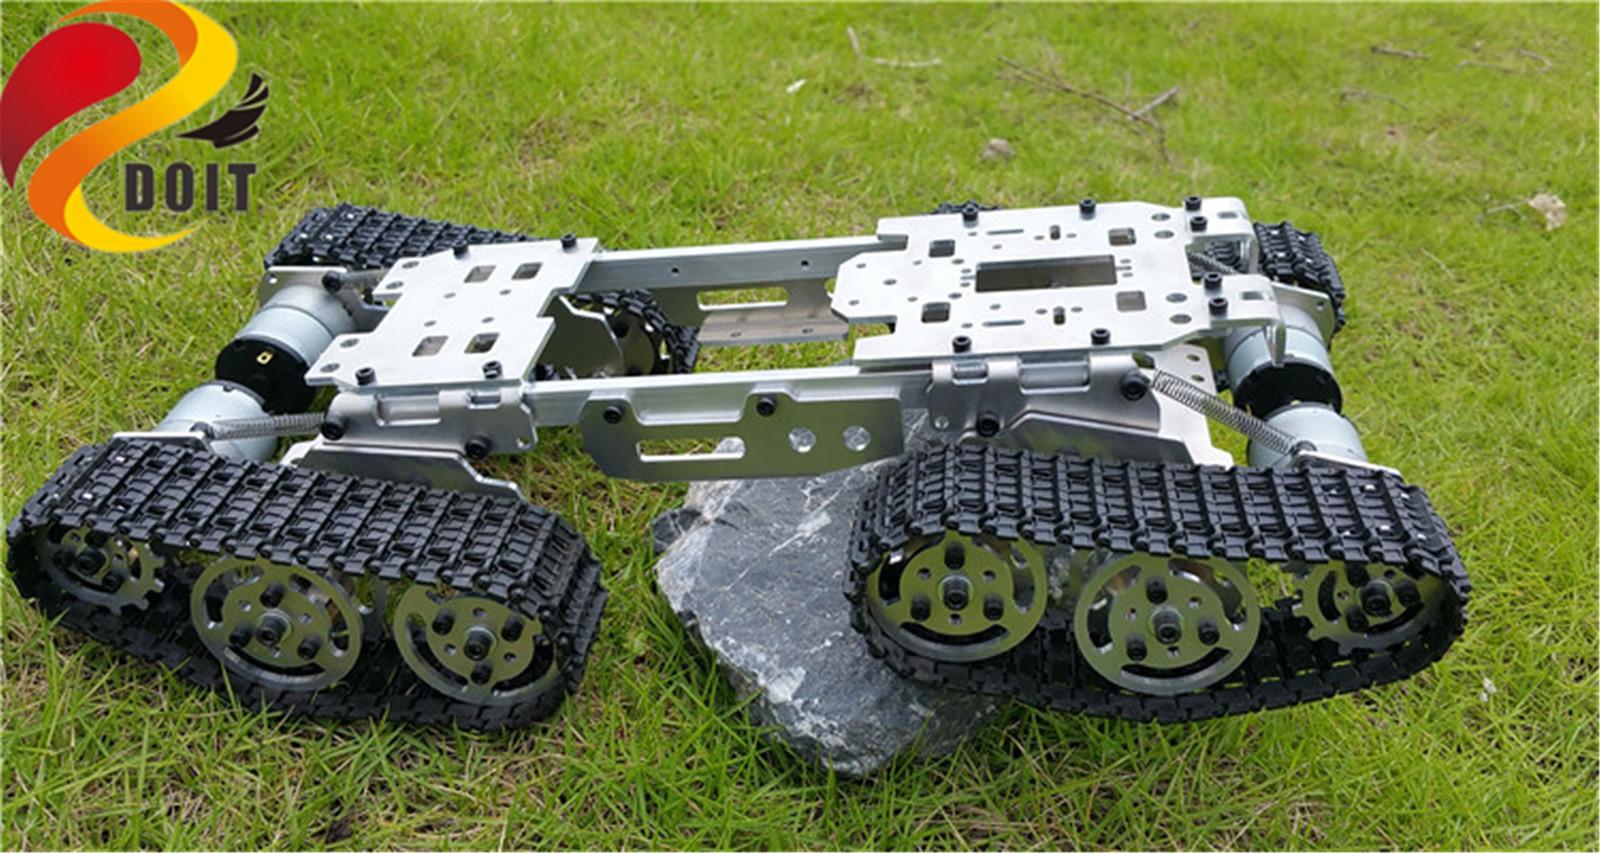 

SZDOIT Full Metal 4WD Smart Robot Tank Car Chassis Kit Heavy Load Off-Road Crawler Robotic Platform 12V Motor DIY For Arduino 201208